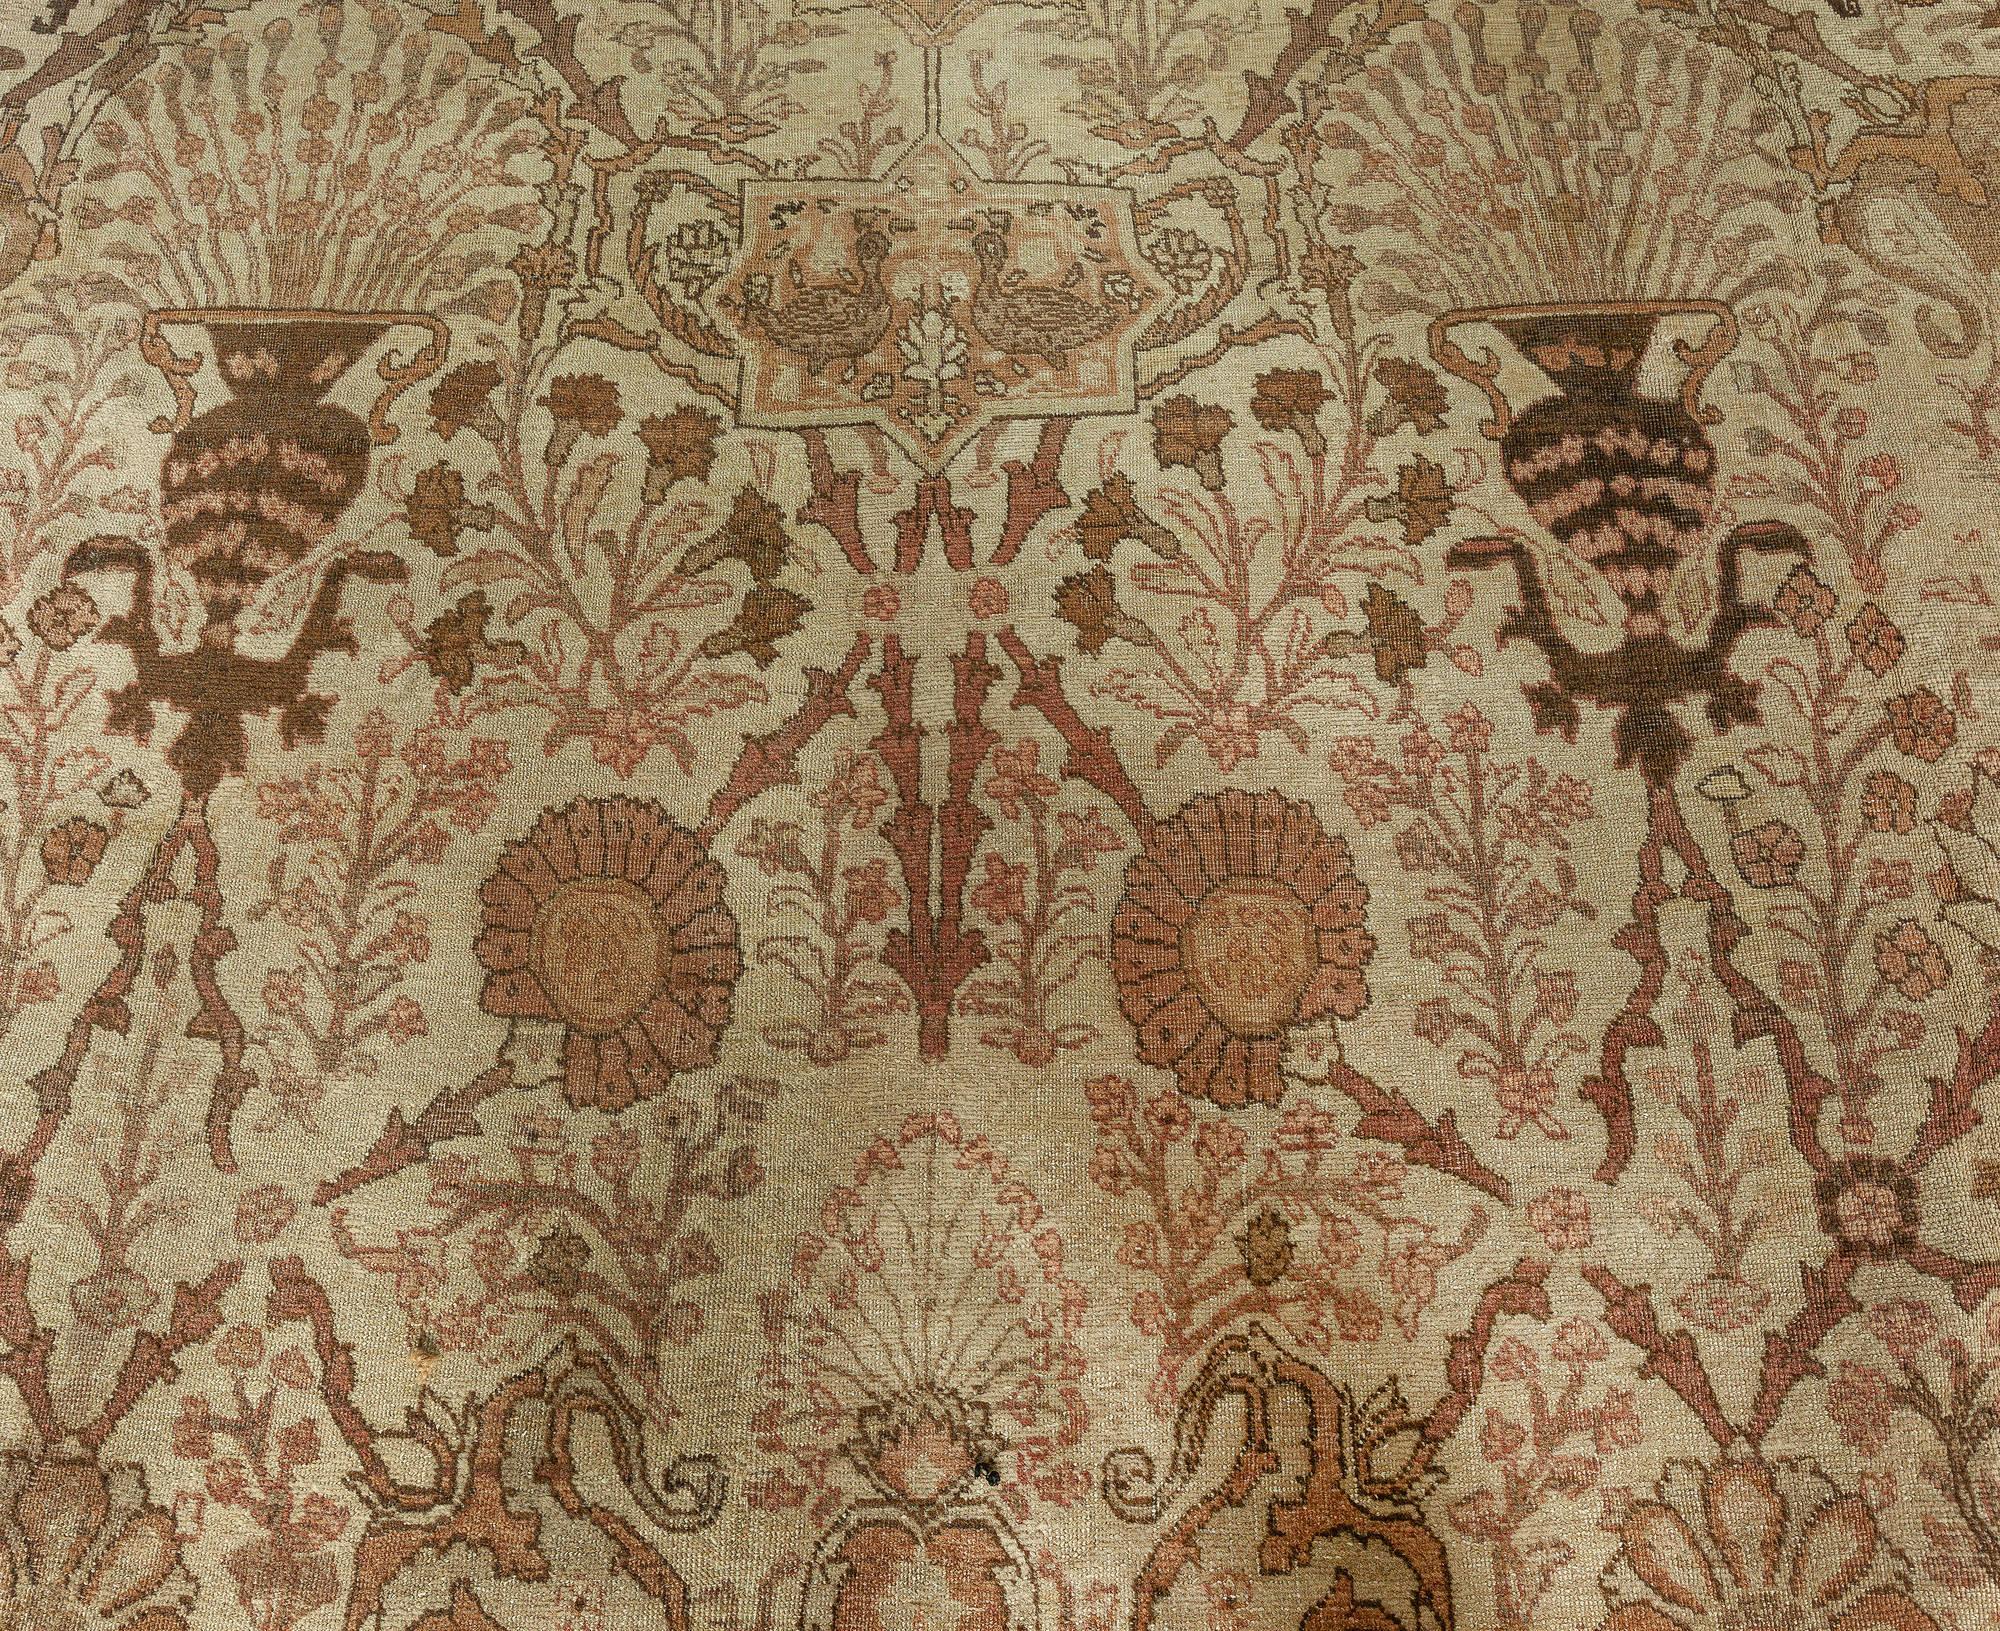 Antique Persian Tabriz Botanic gray handmade wool rug
Size: 11'7